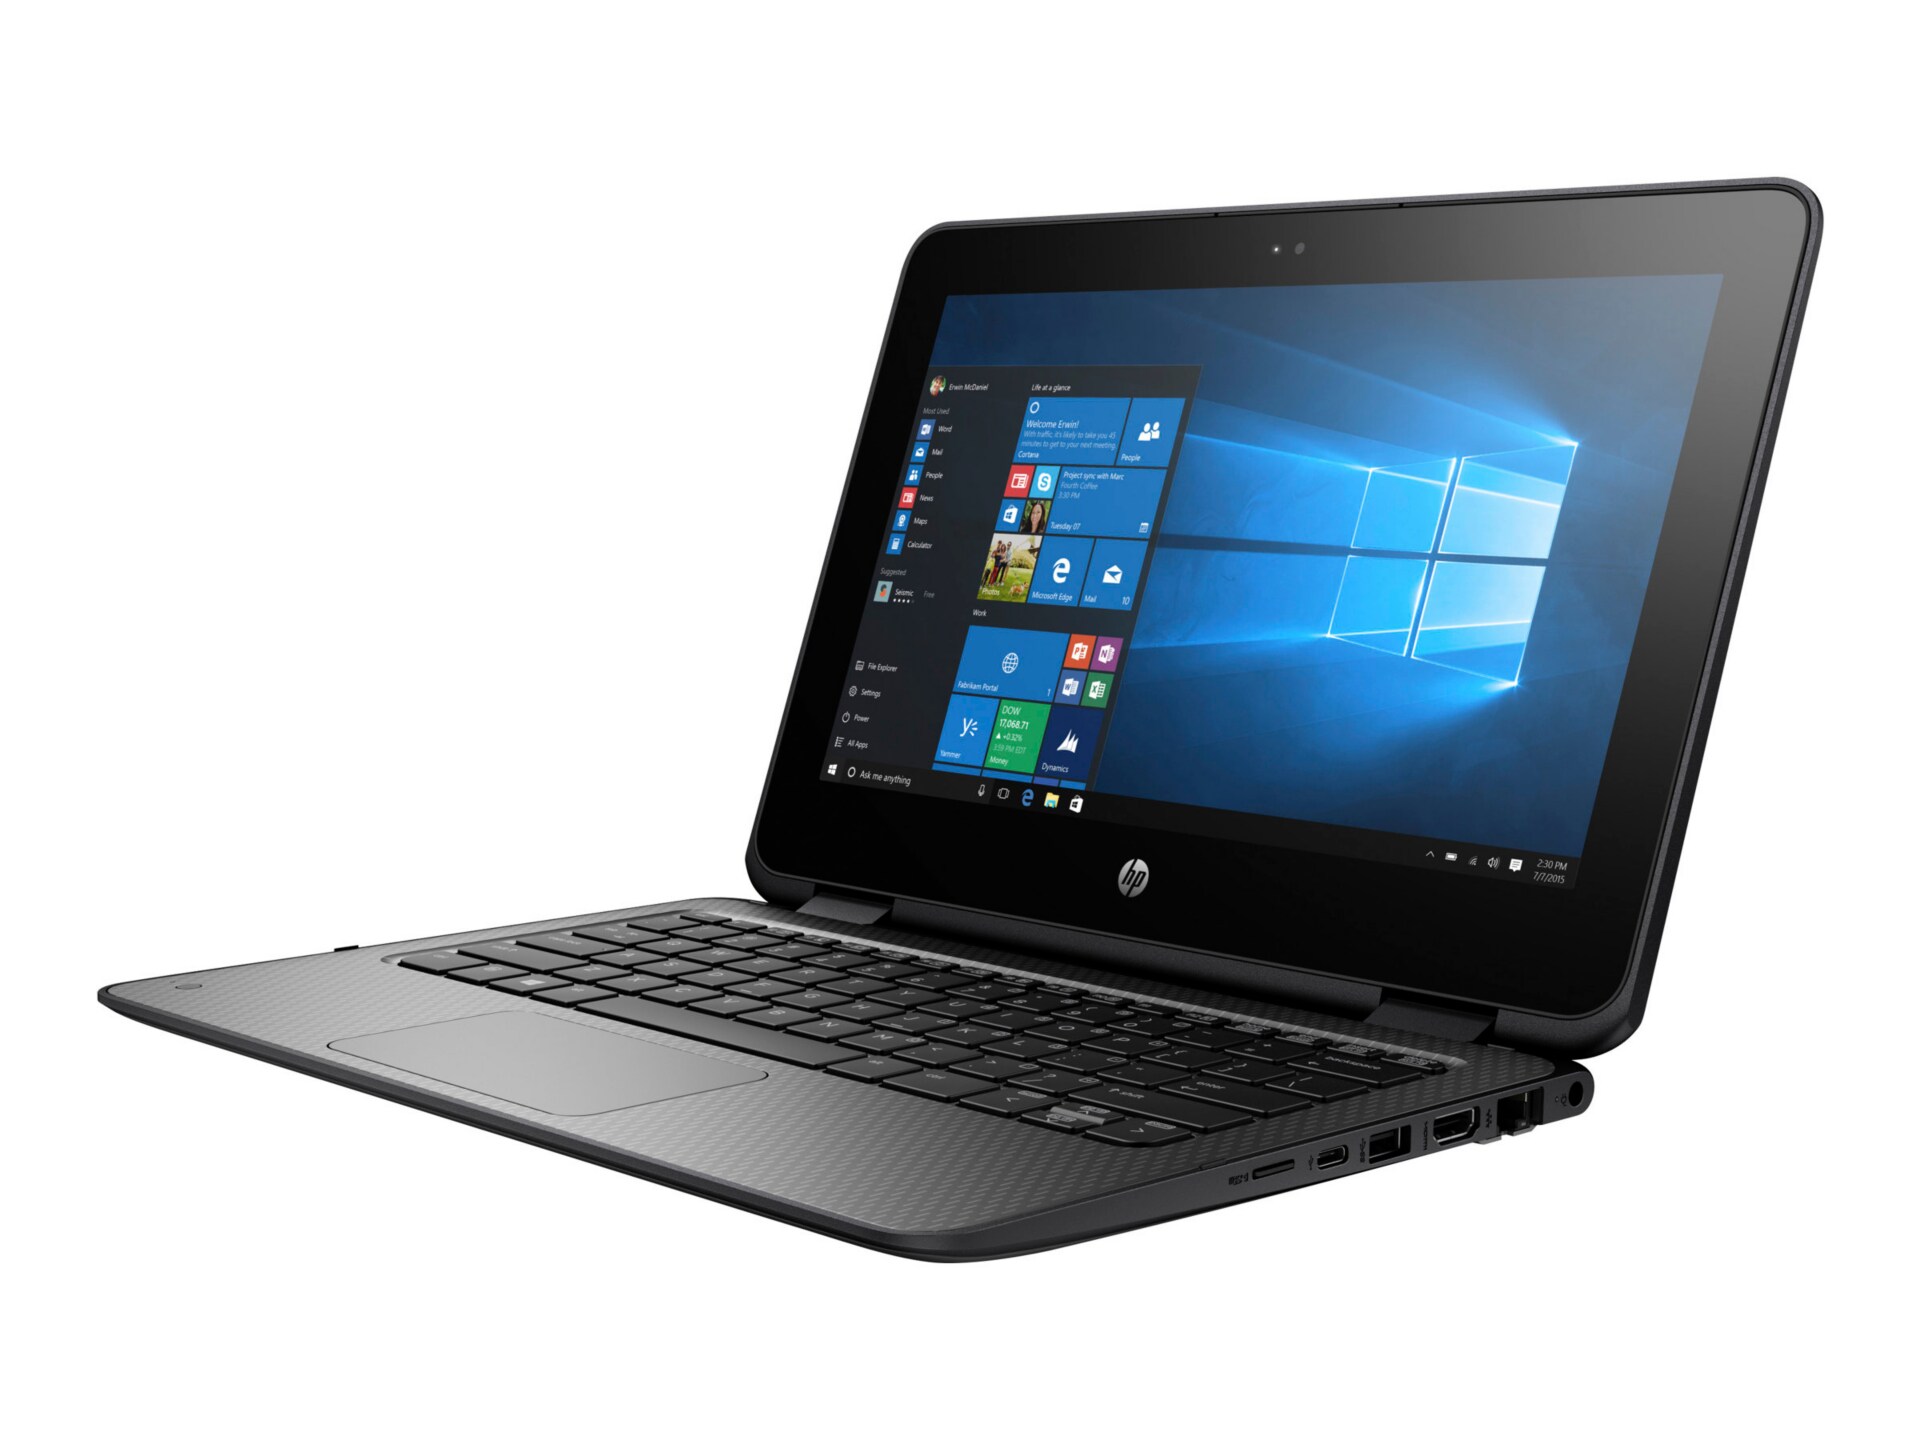 HP ProBook x360 11 G1 - Education Edition - 11.6" - Pentium N4200 - 4 GB RAM - 128 GB SSD - US